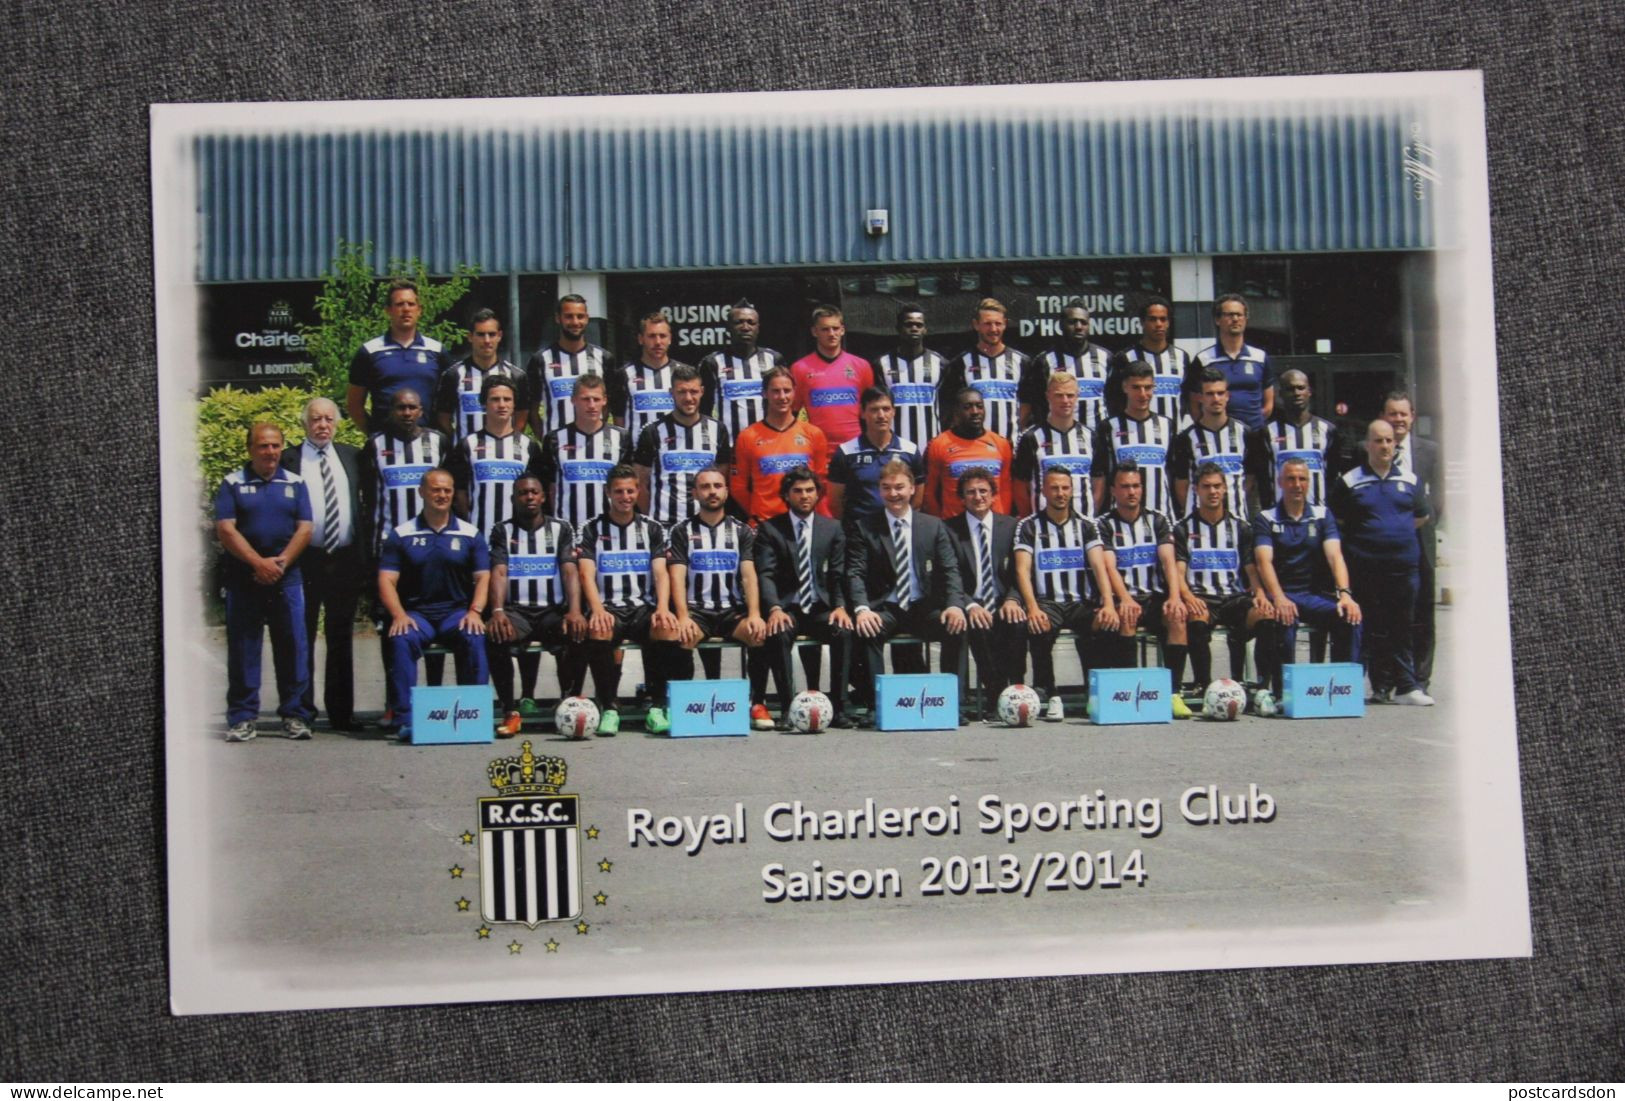 FUSSBALL-FOOTBALL-SOCCER- CALCIO, -Royal Charleroi Sporting Club -  OLD Photo Postcard Size - Fussball